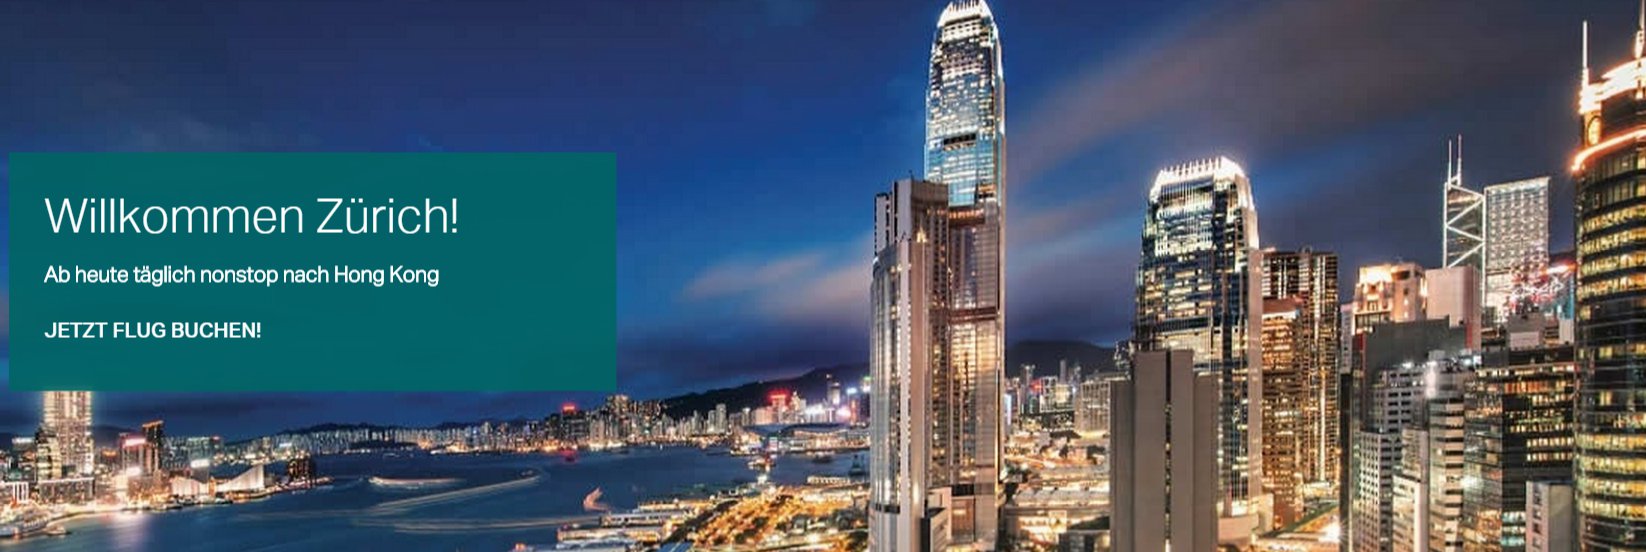 Cathay Pacific fliegt ab sofort täglich nach Hong Kong!